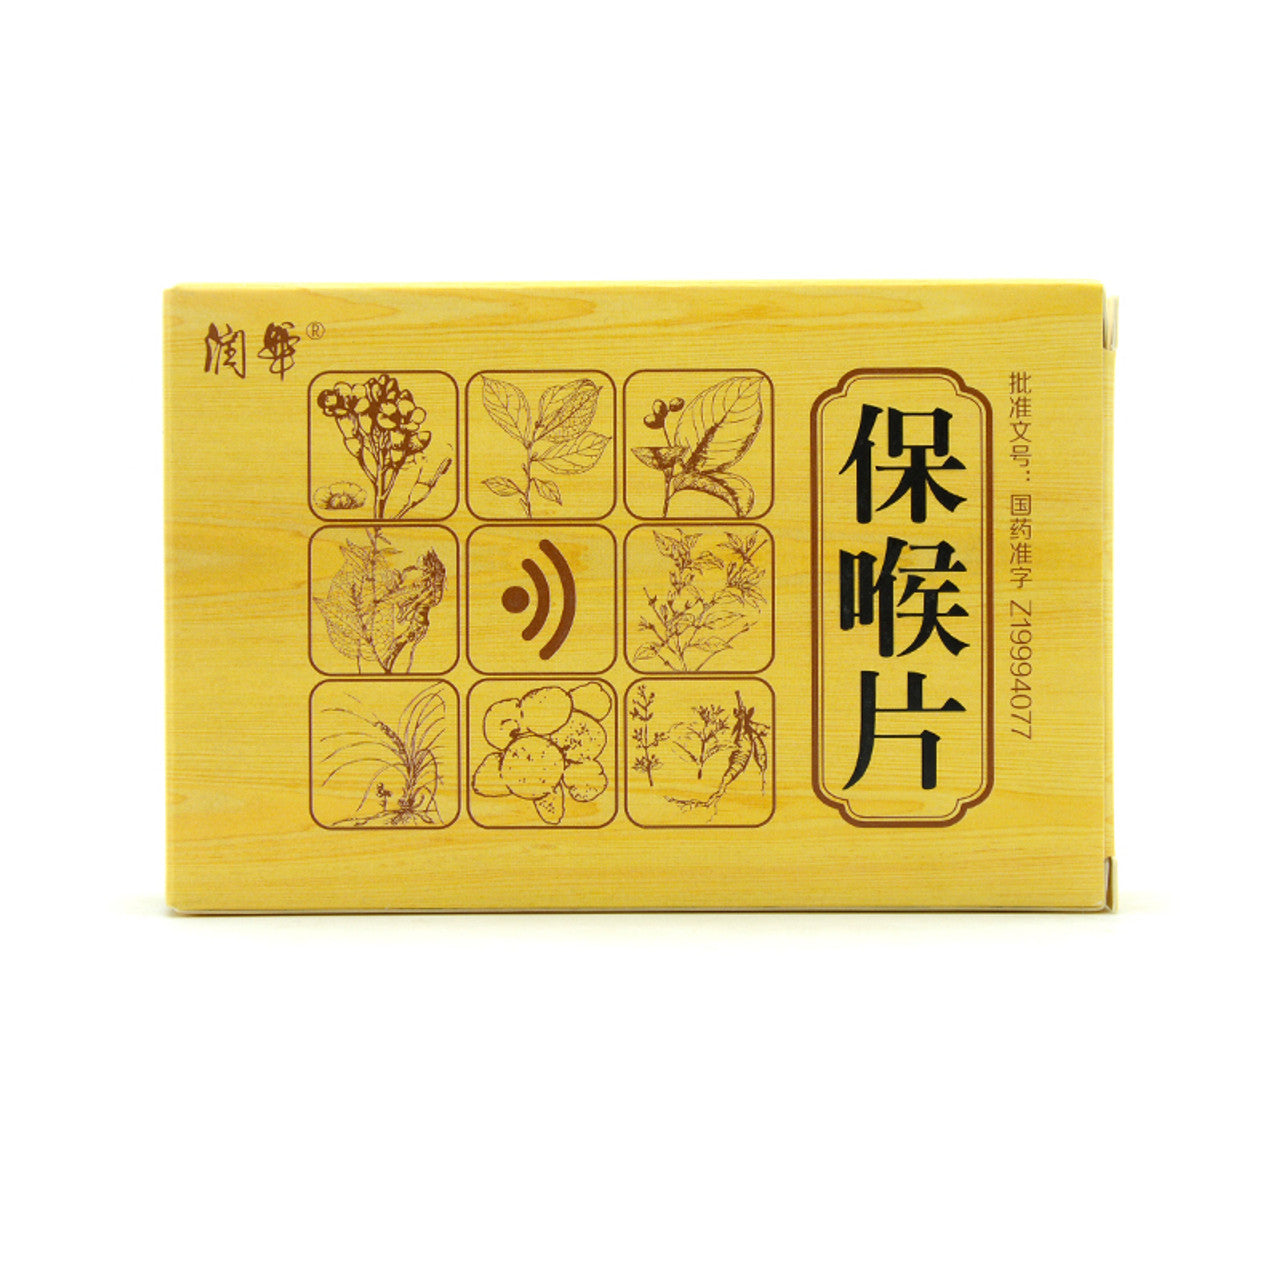 Traditional Chinese Medicine. Baohou Pian or Baohou Tablets for Pharyngitis. Bao Hou Pian. 0.75g*12 Tablets*5 boxes.